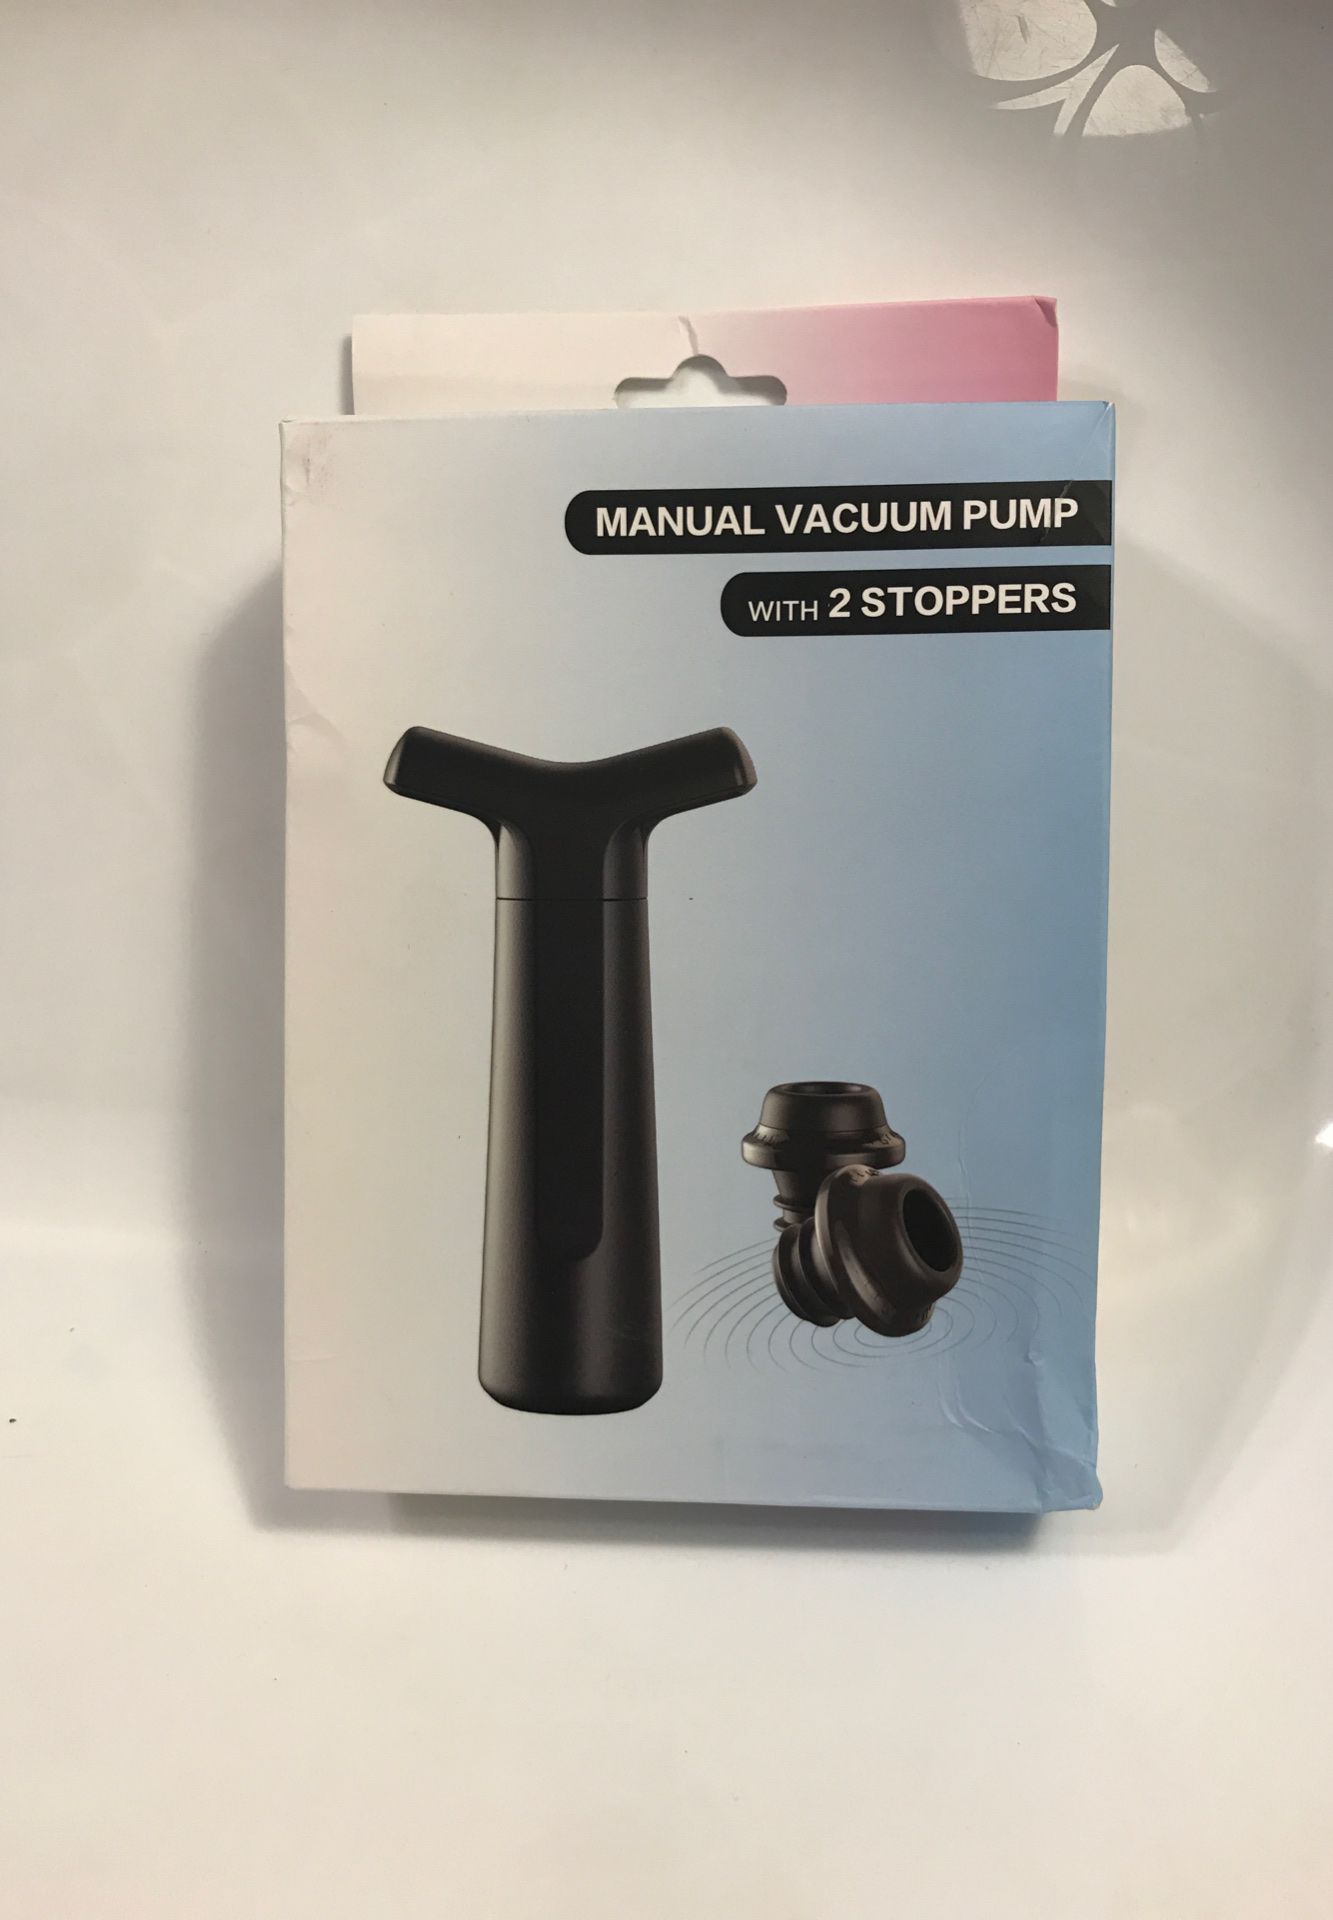 Wine manual vacuum pump